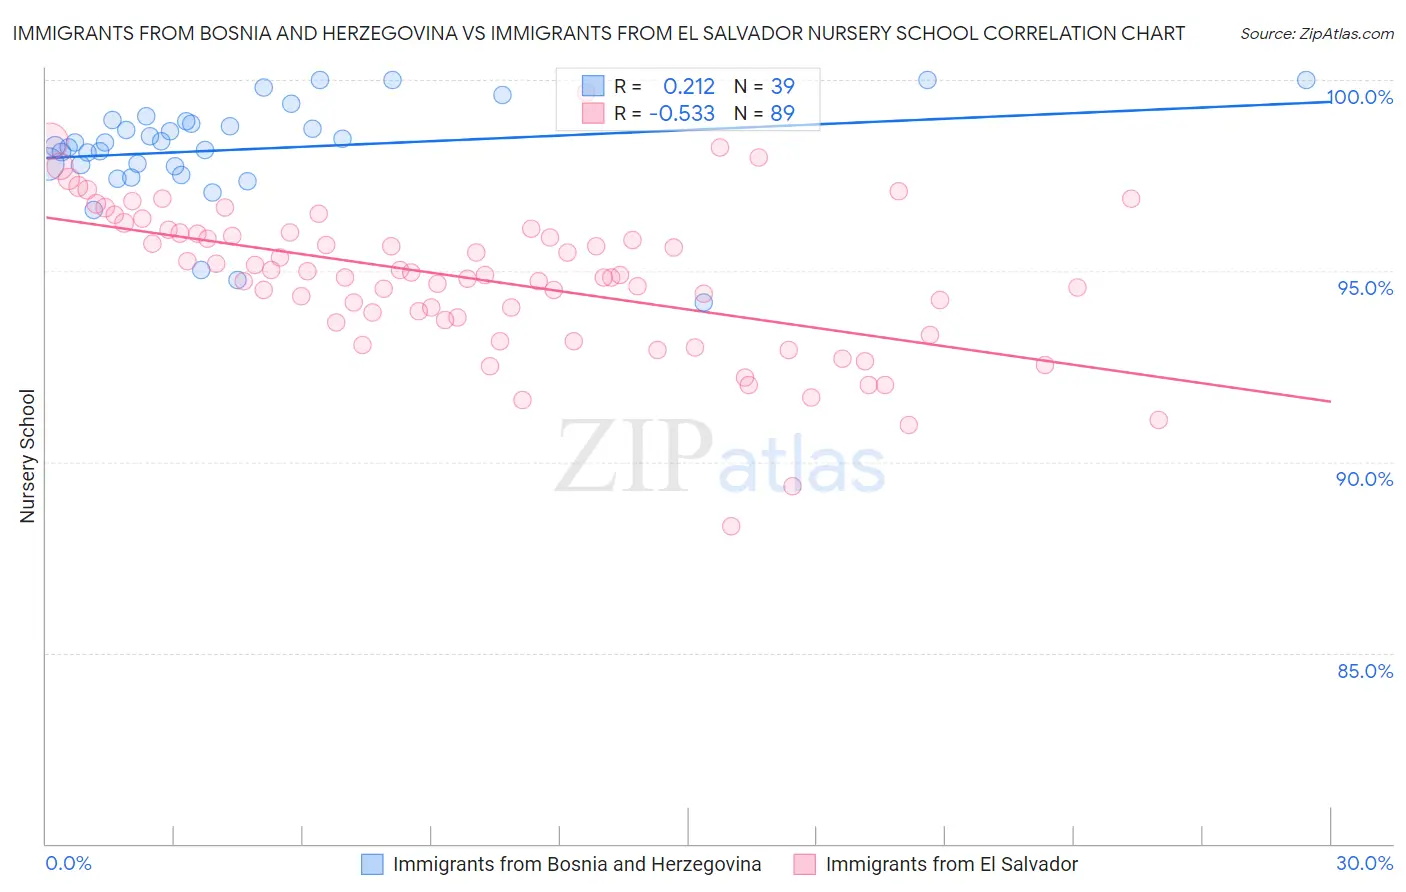 Immigrants from Bosnia and Herzegovina vs Immigrants from El Salvador Nursery School